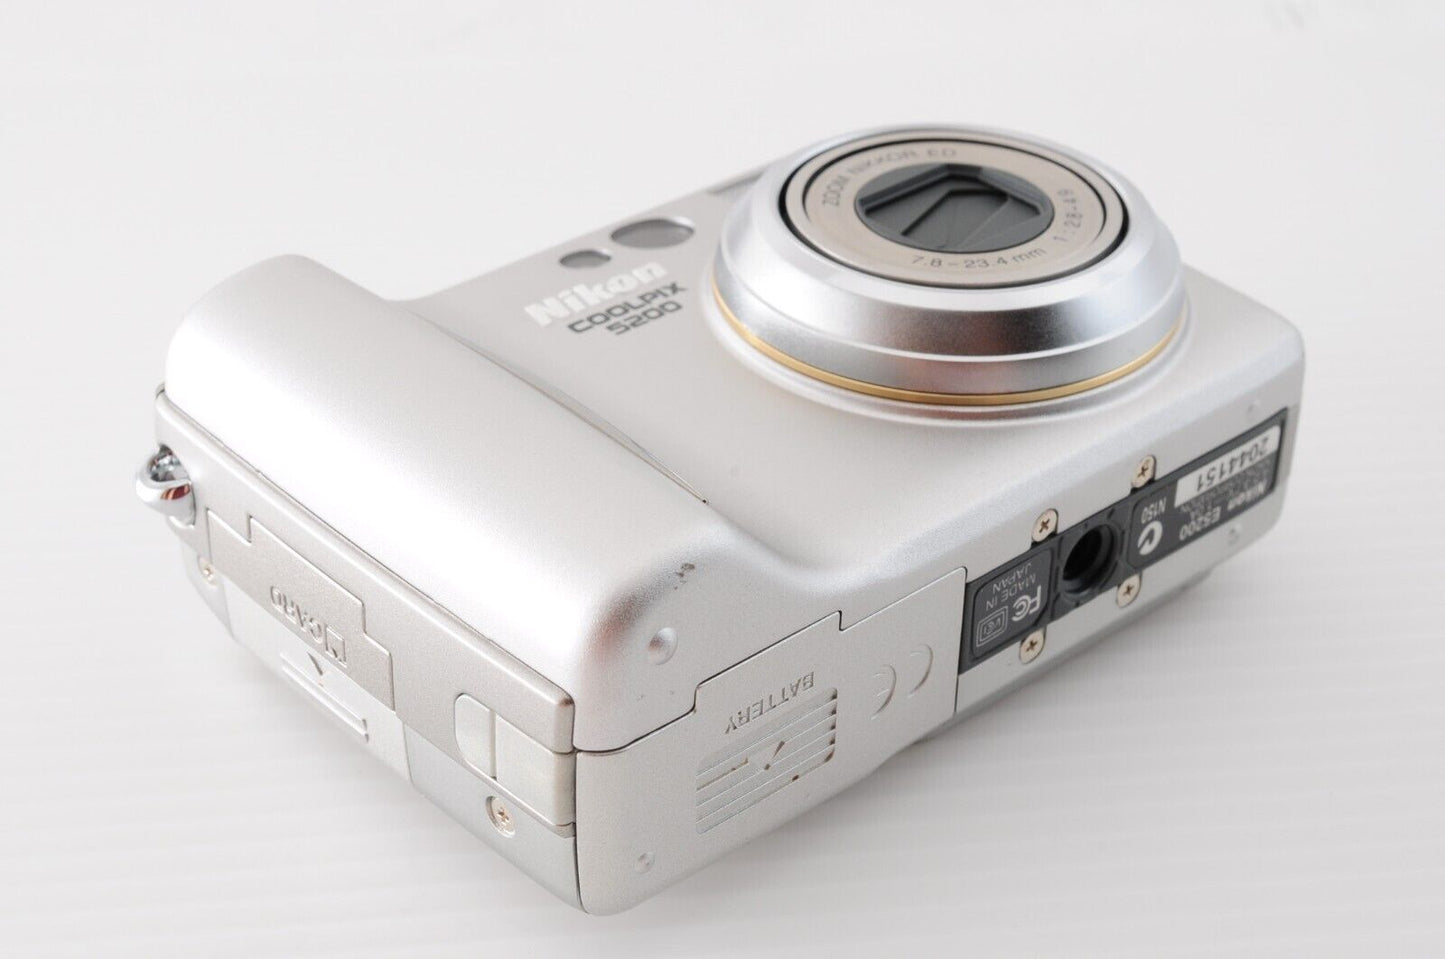 NIKON COOLPIX E5200 Silver  Point & Shoot Digital Camera from Japan #7167